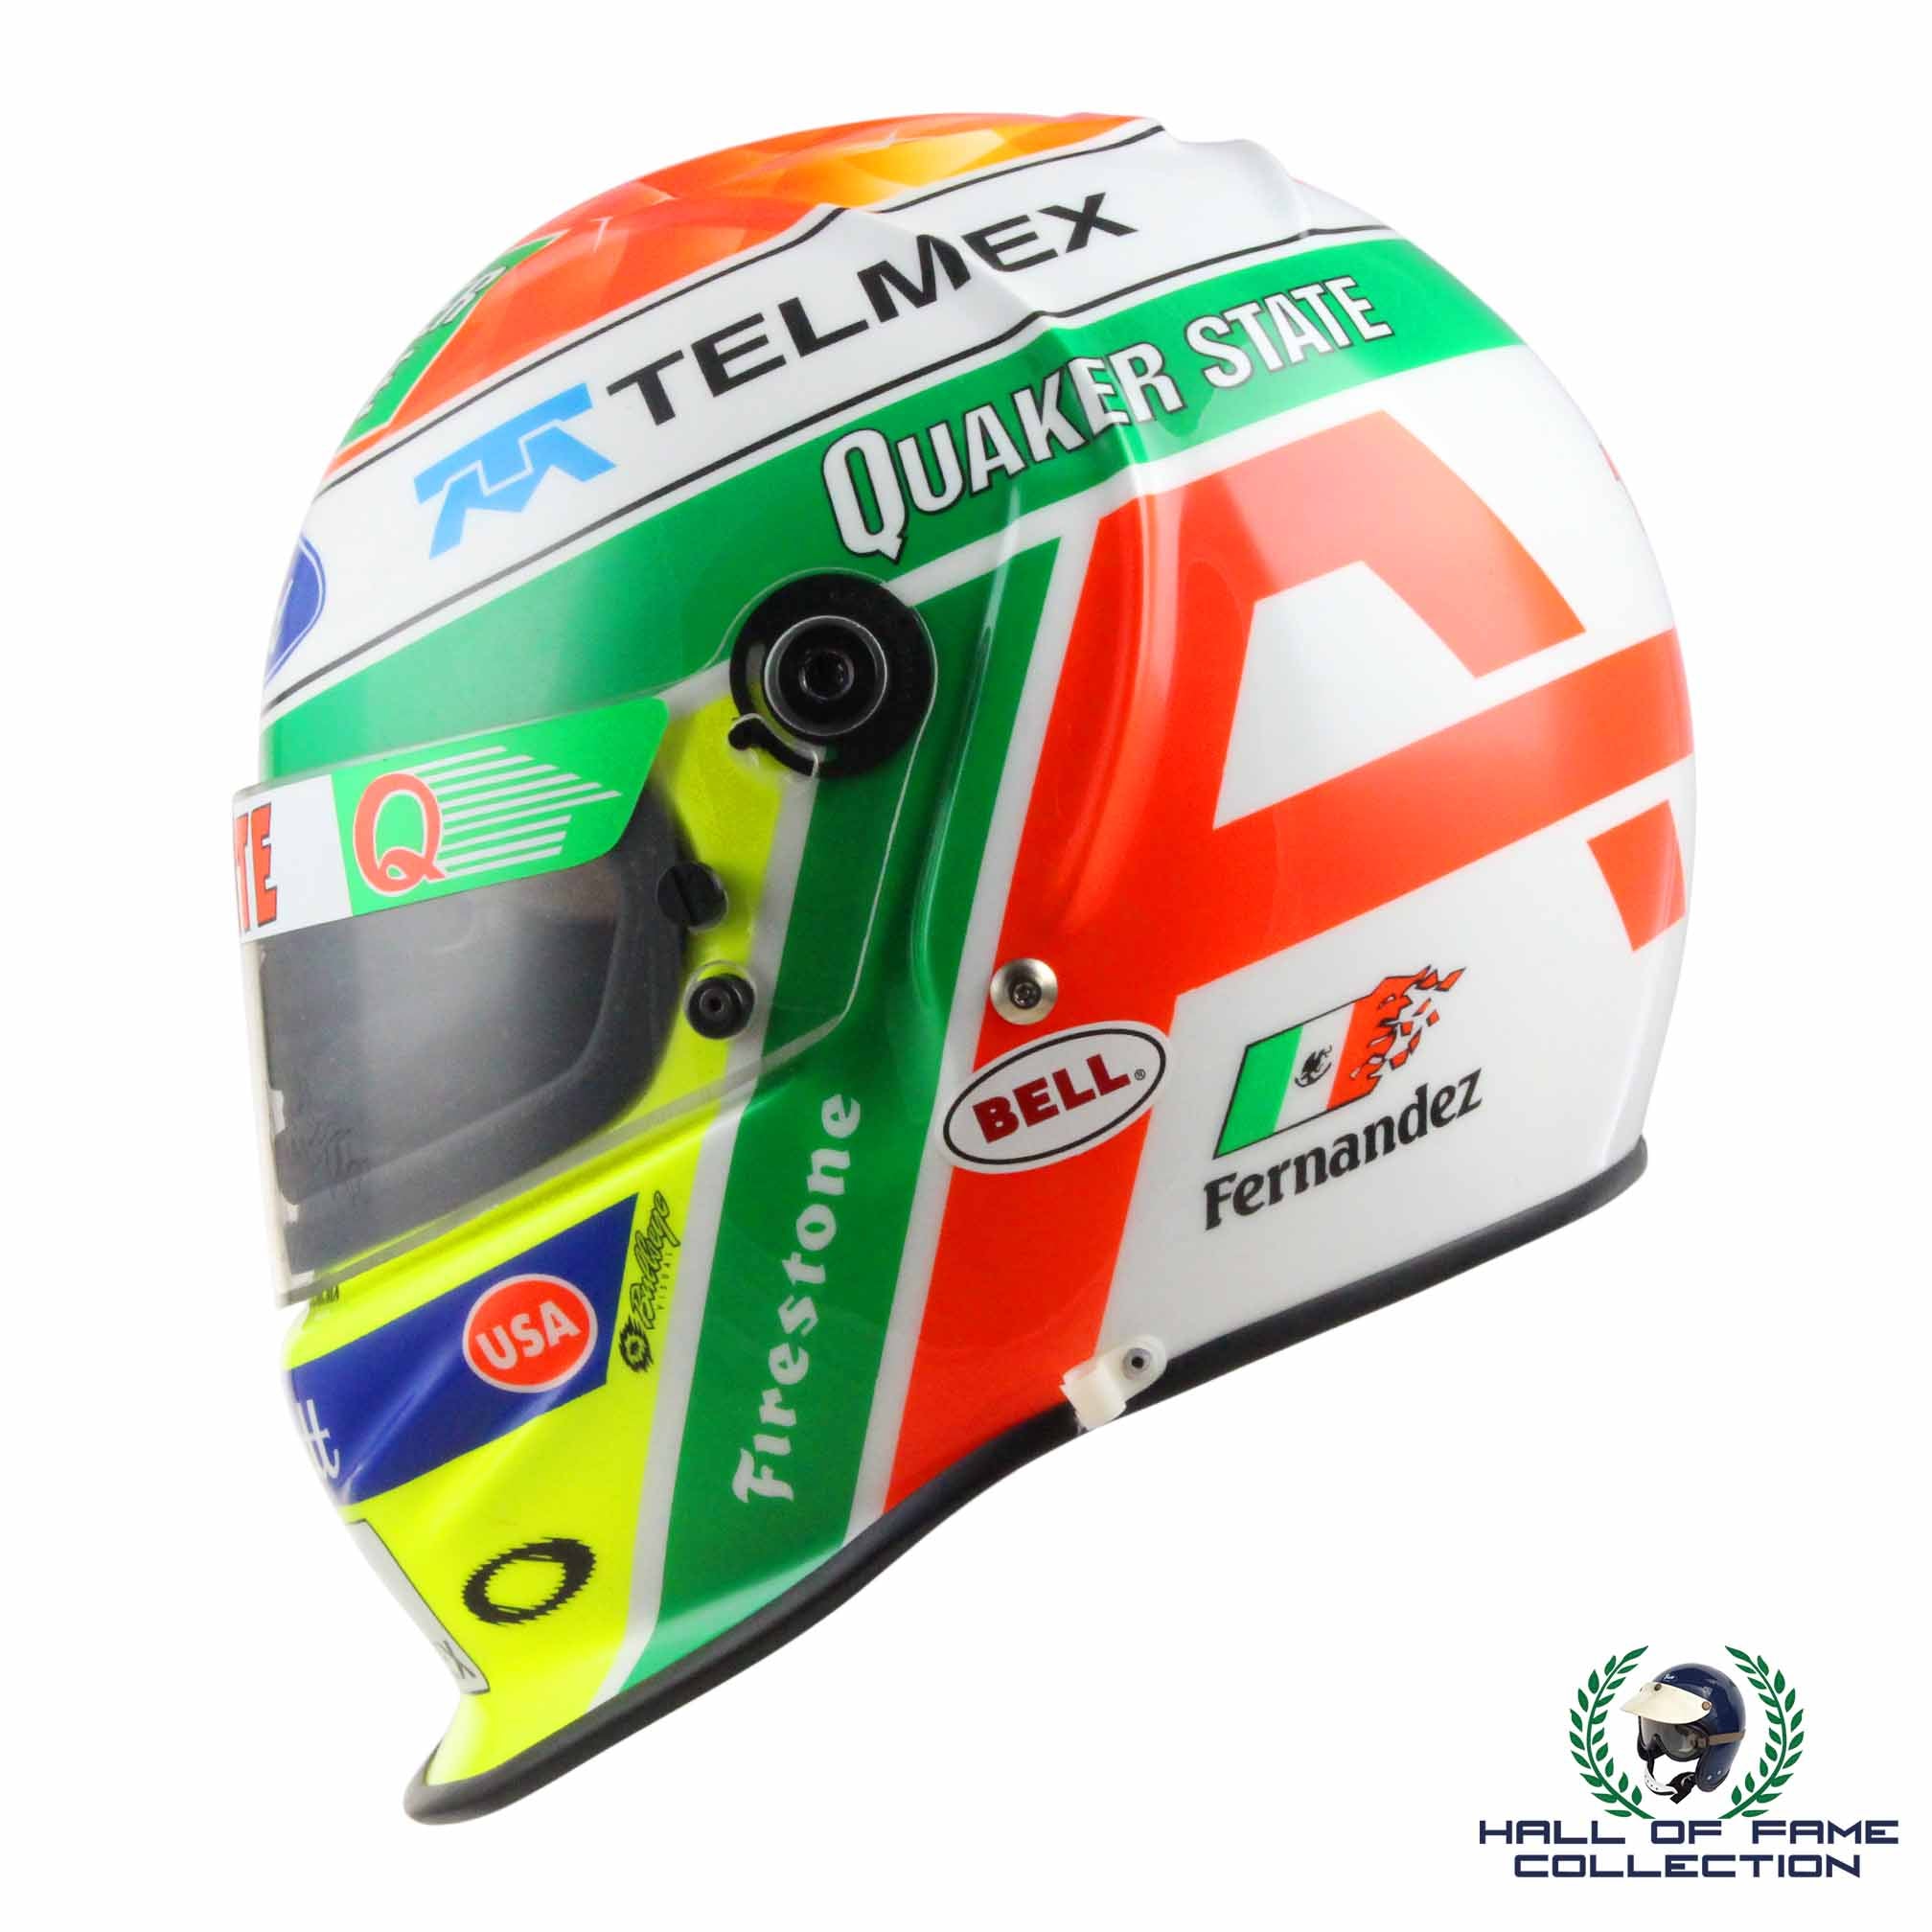 1999 Adrian Fernández Signed Race Used Pat Patrick Racing Bell Dominator IndyCar Helmet